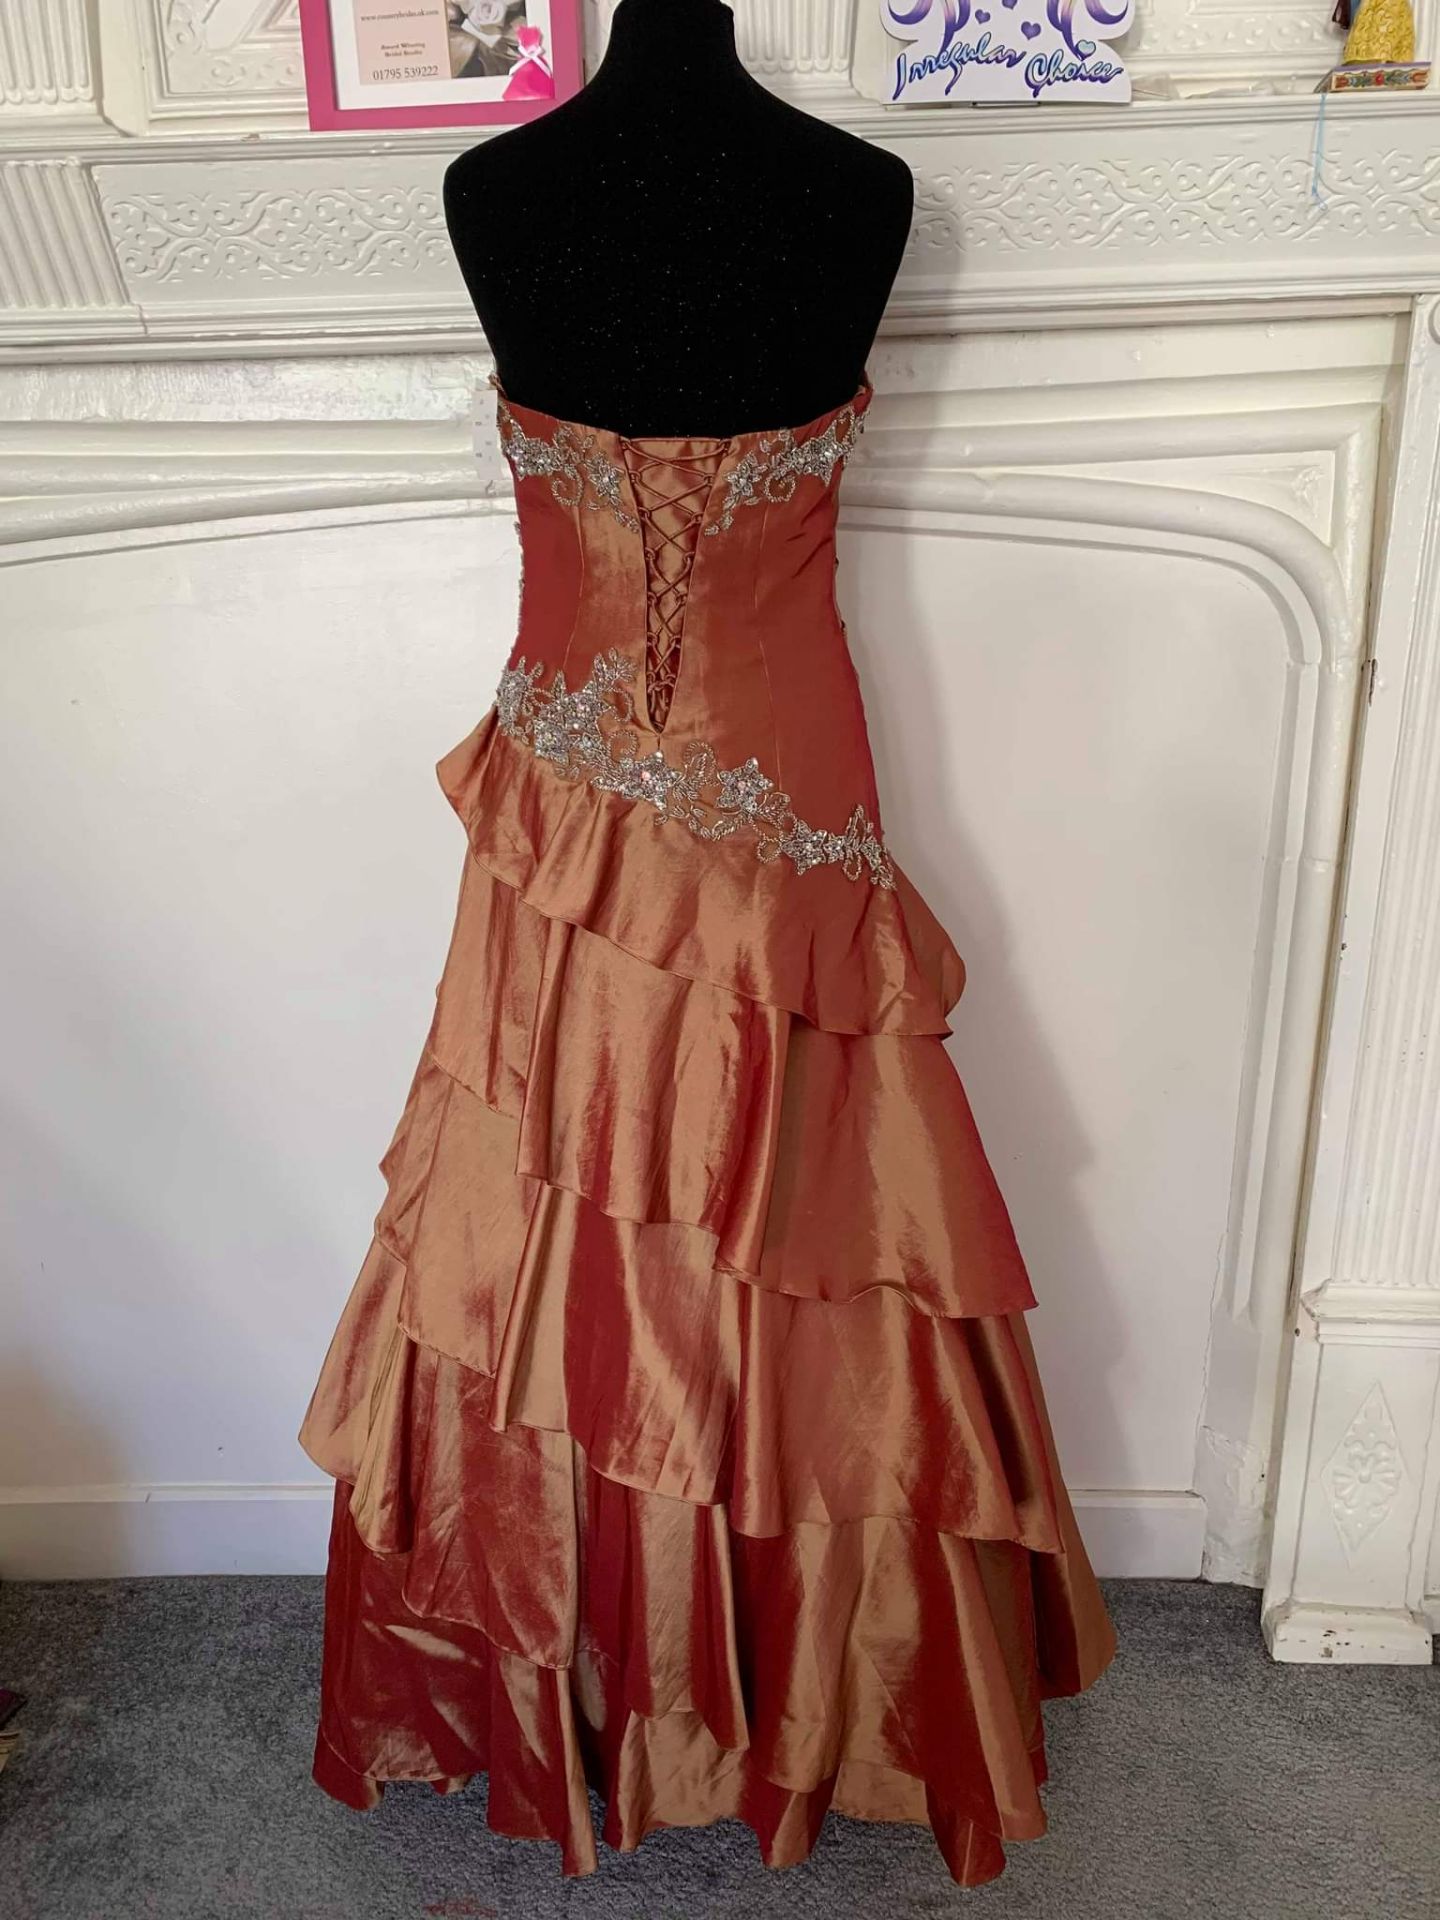 Bronze Prom Dress Size 8 - Image 2 of 2